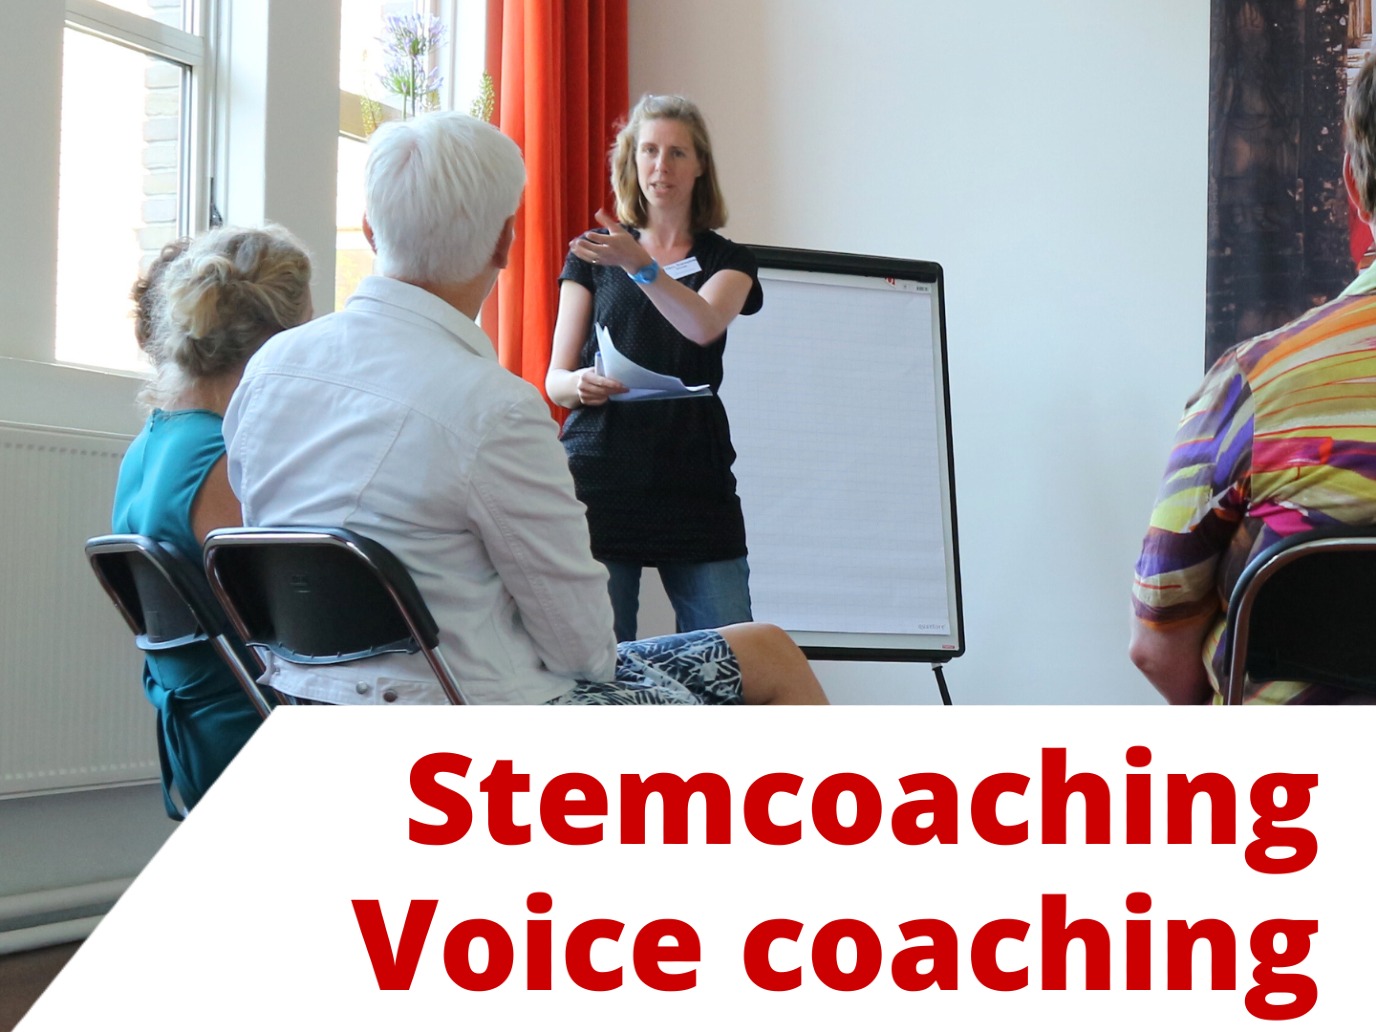 Voice coaching